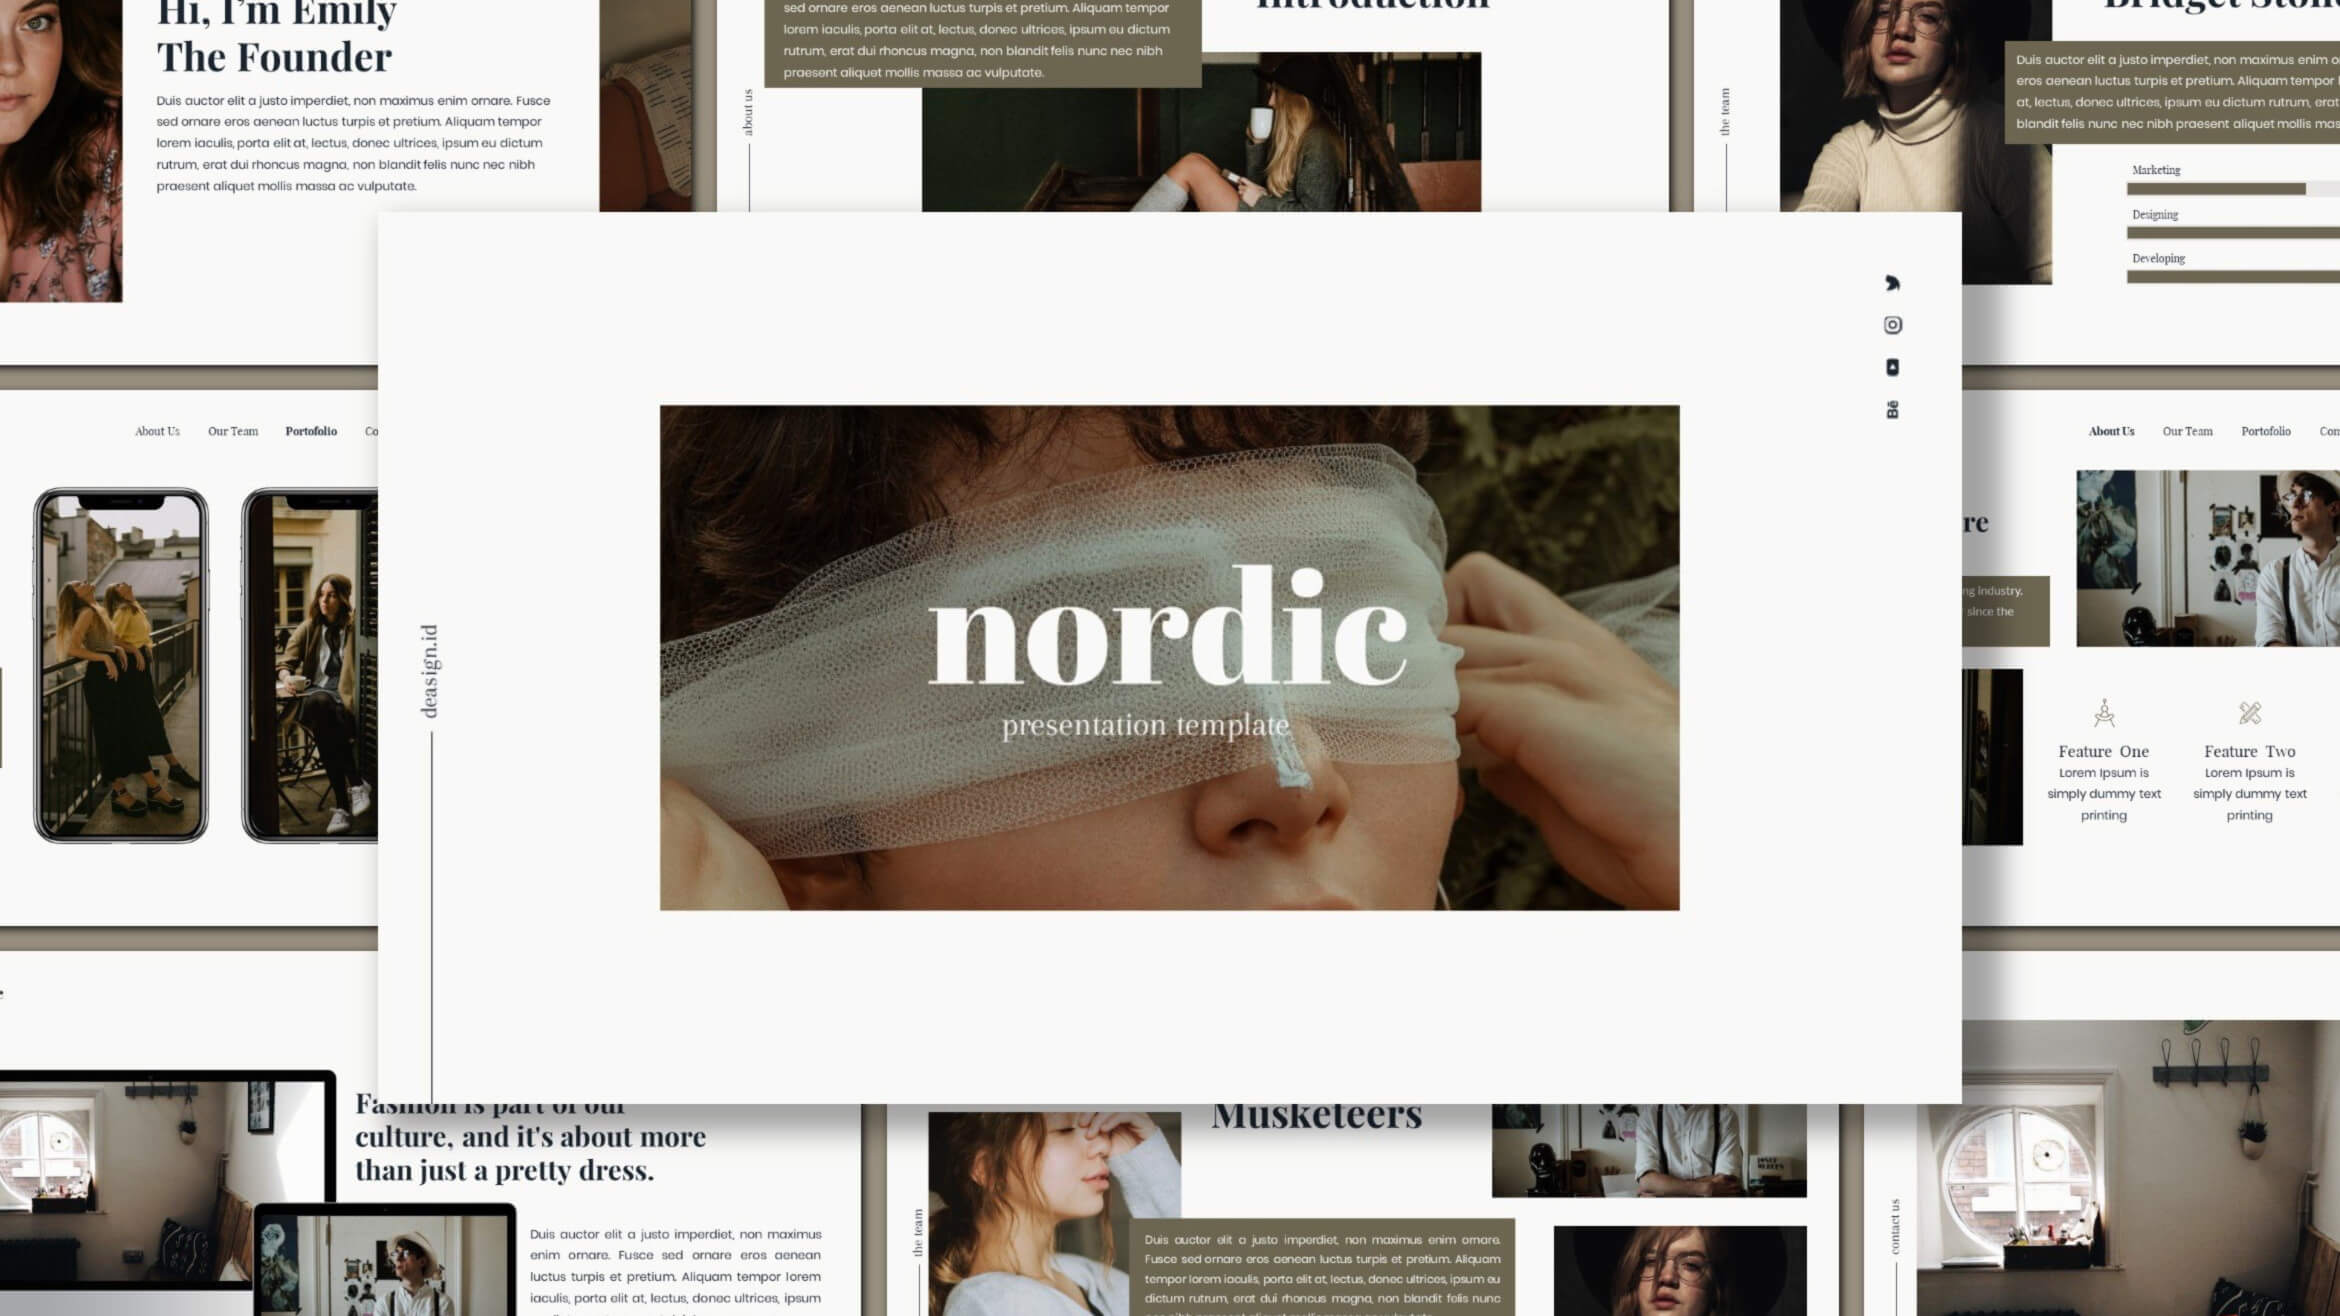 Nordic - Creative Fashion Presentation Template (7 Slides)